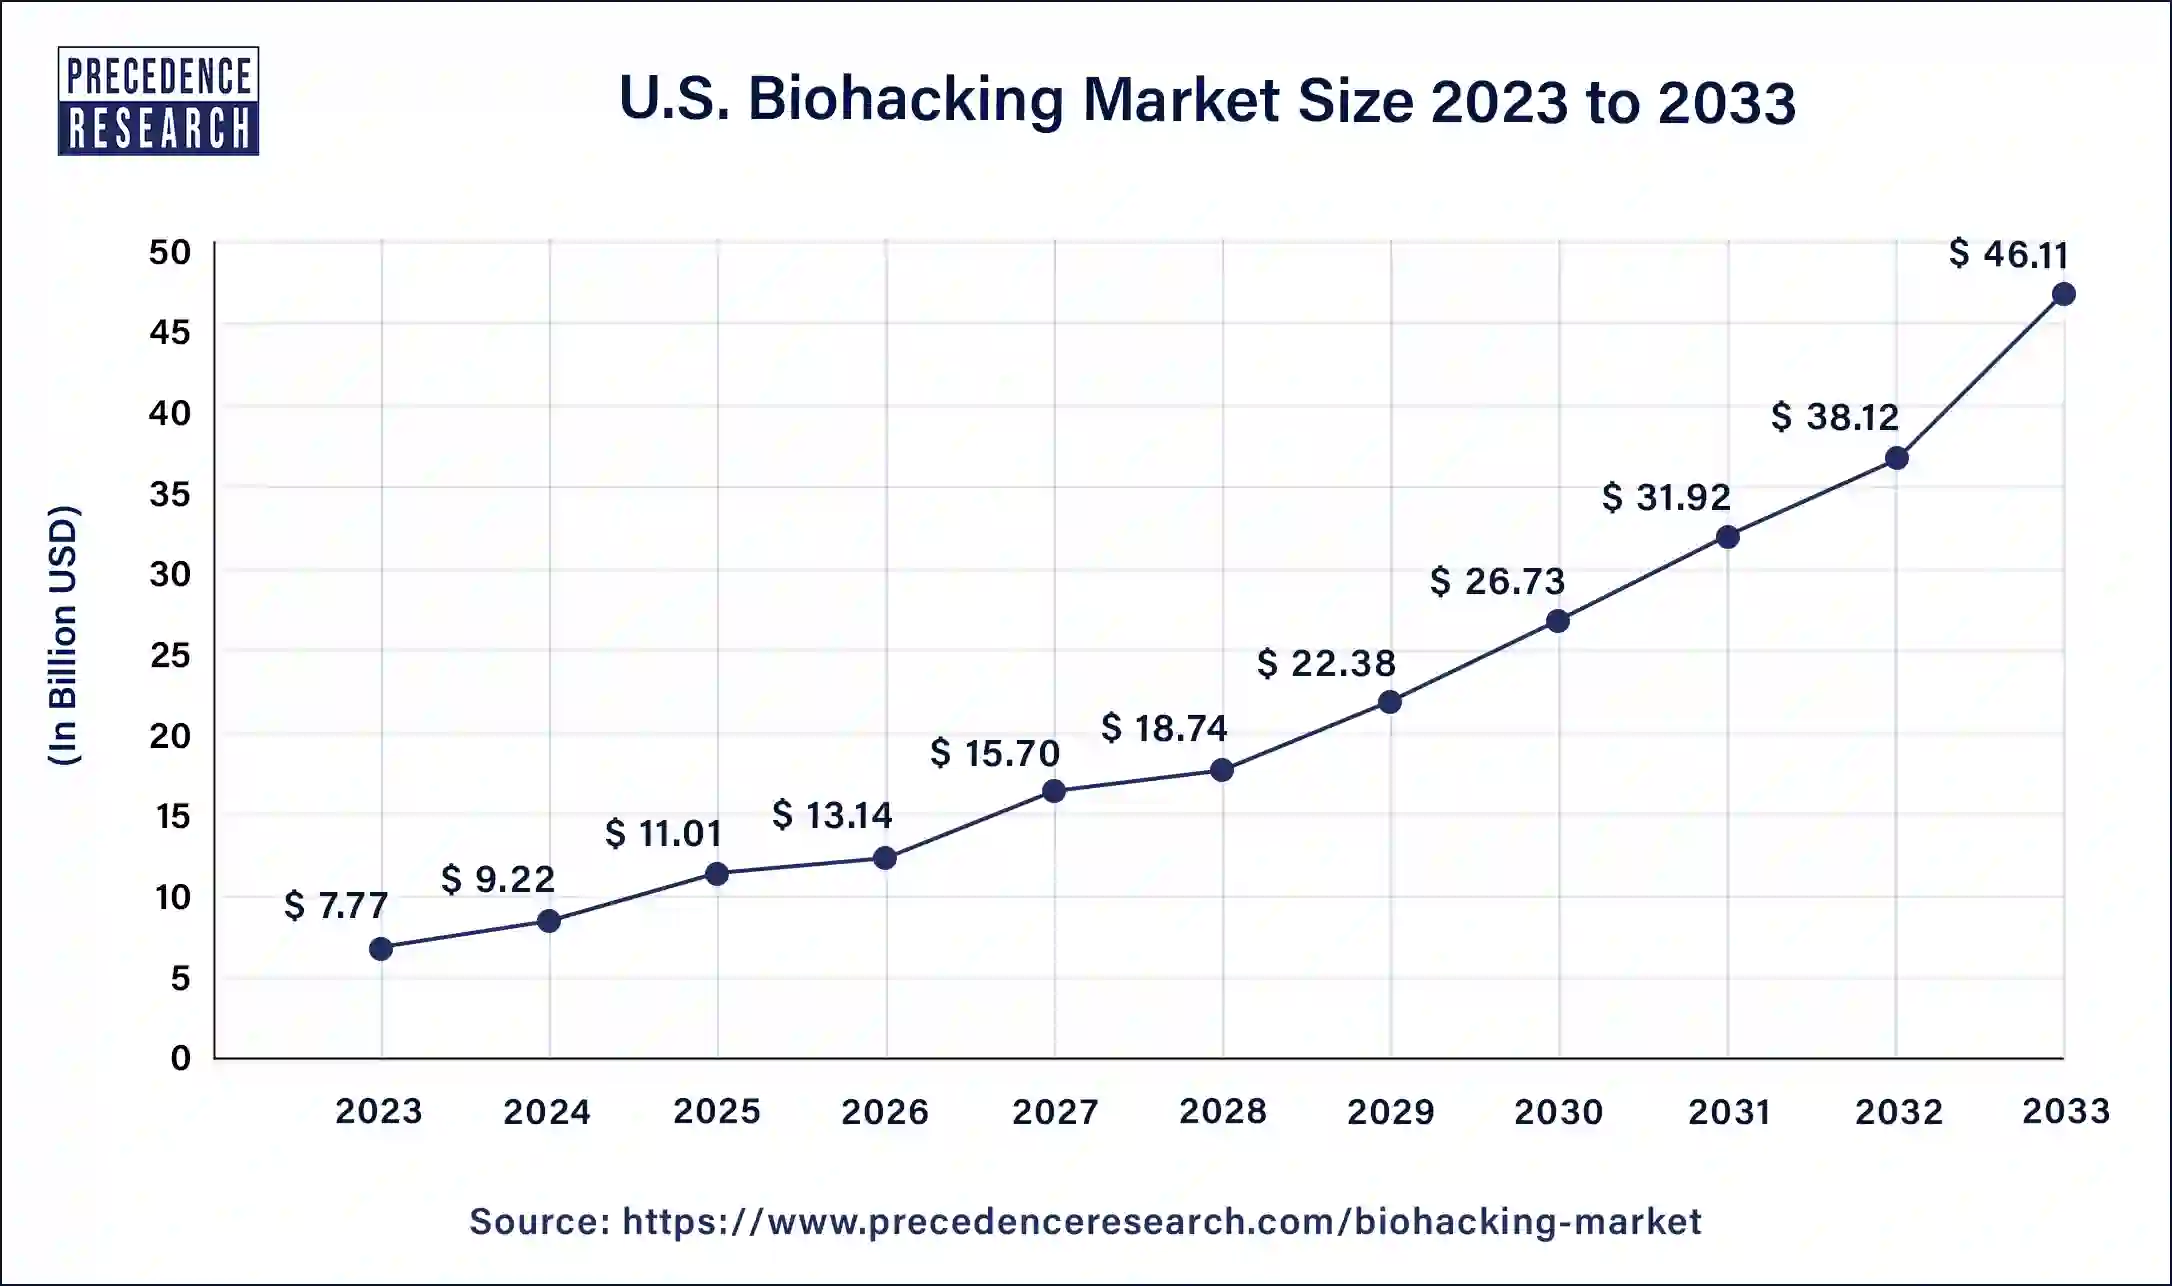 U.S. Biohacking Market Size 2024 to 2033